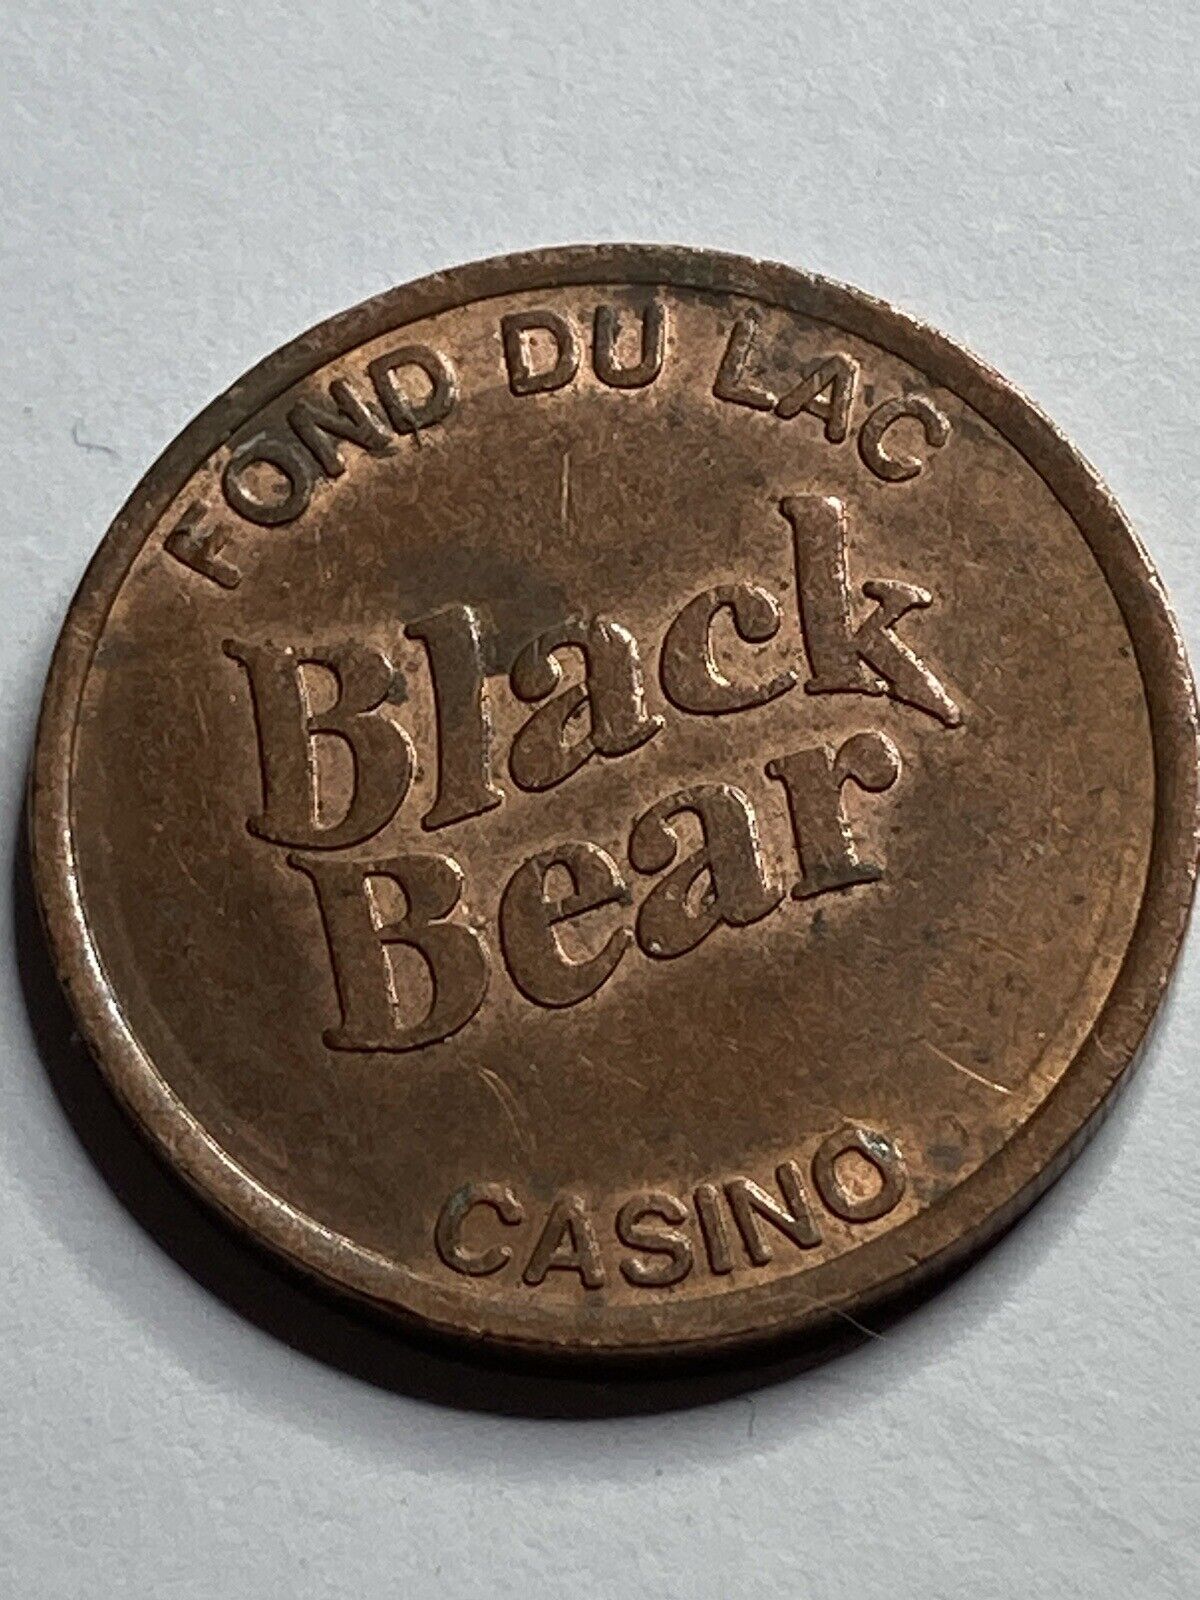 Older Black Bear Casino Token Duluth Minnesota Fond du Lac Superior Chippewa rw1